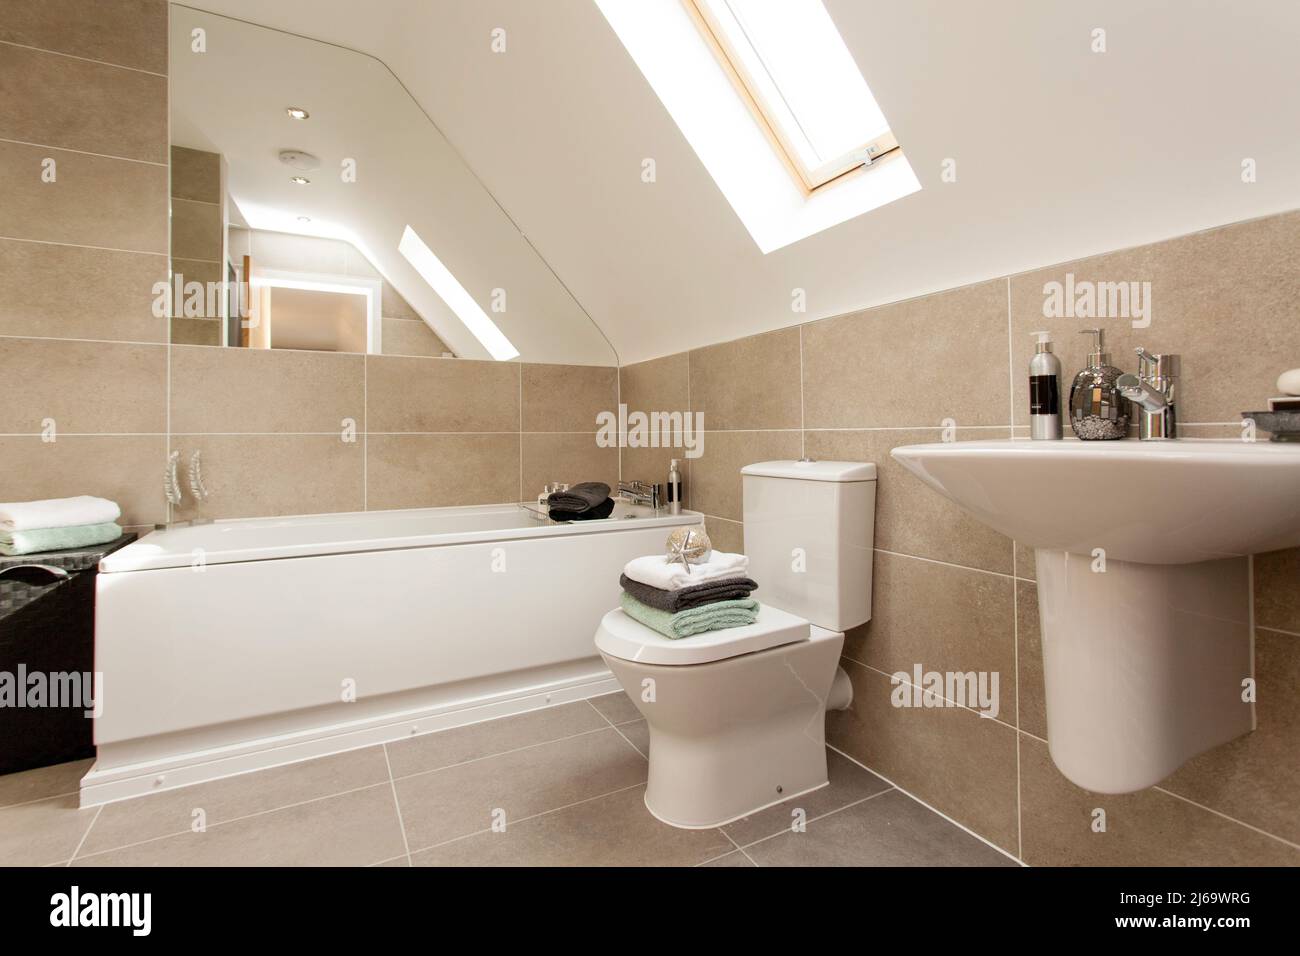 Moderno baño con azulejos en colores neutros. Foto de stock